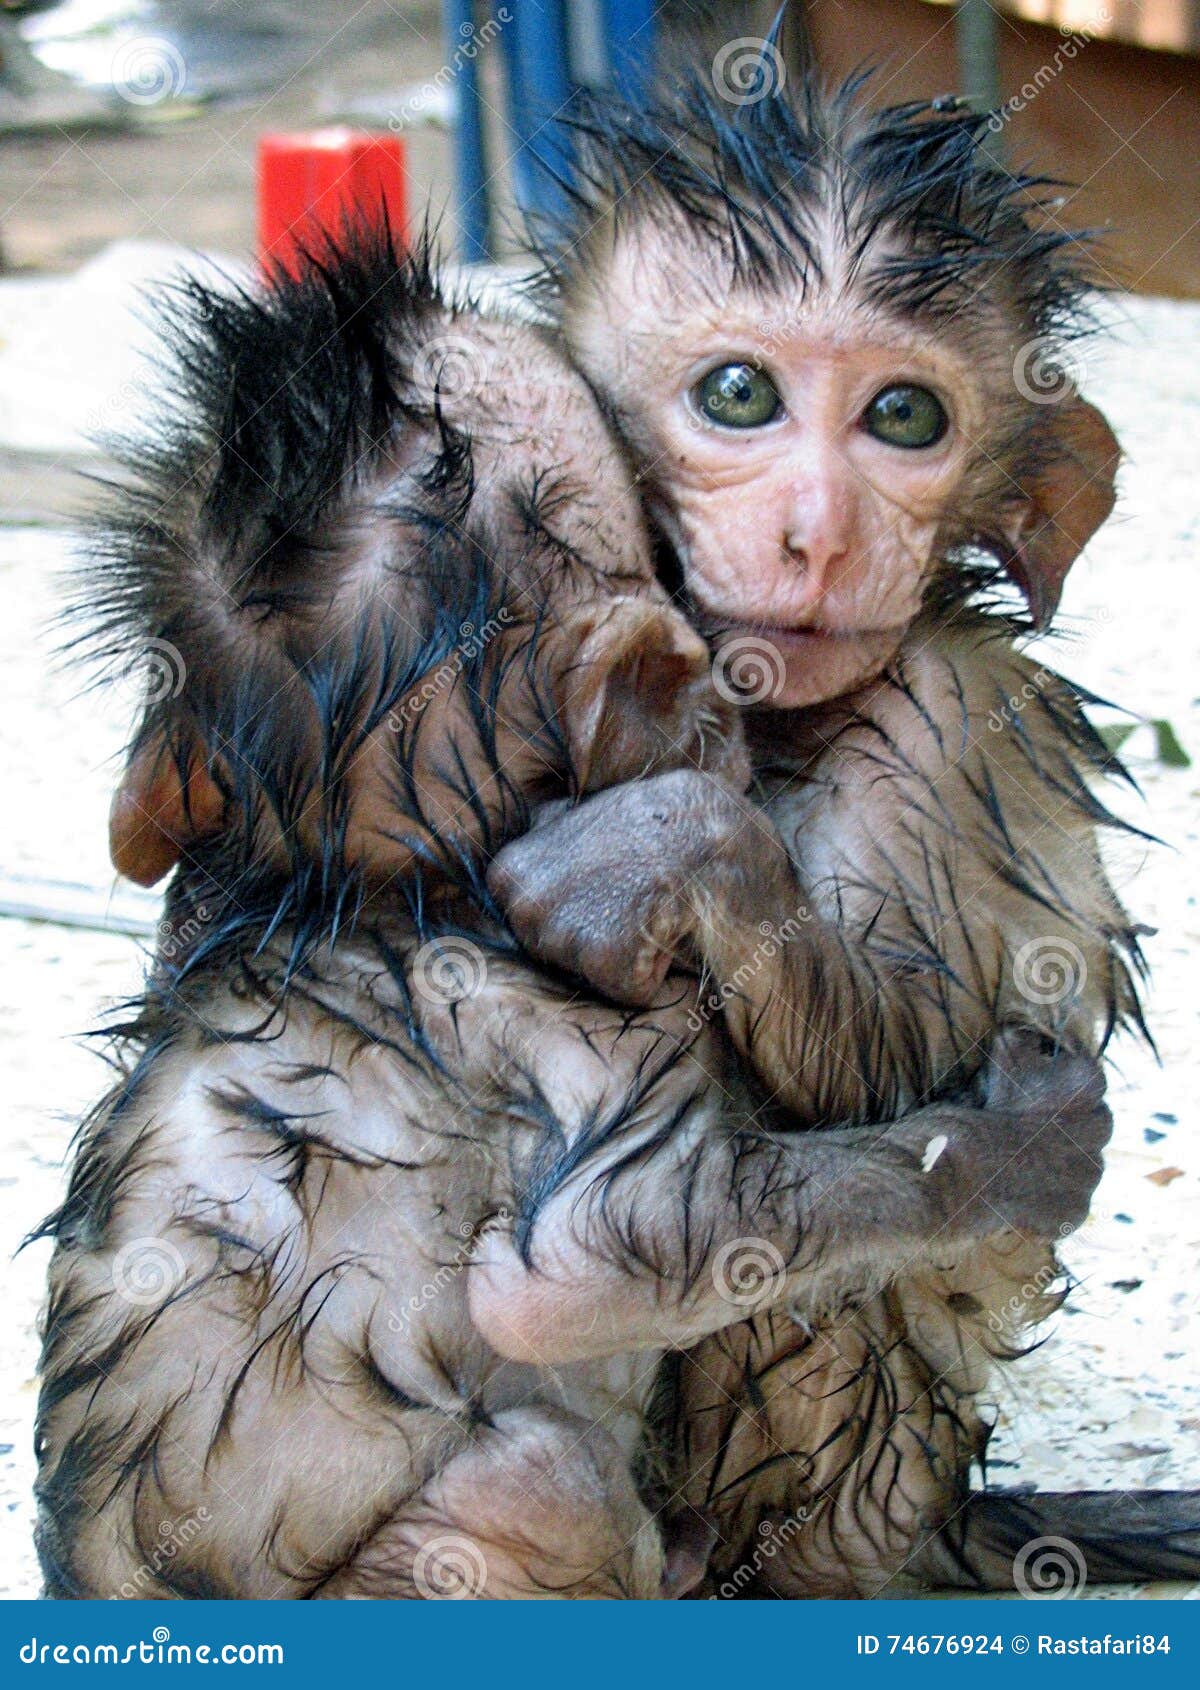 Baby Monkey Hug Stock Photo Image Of Wonderful Cute